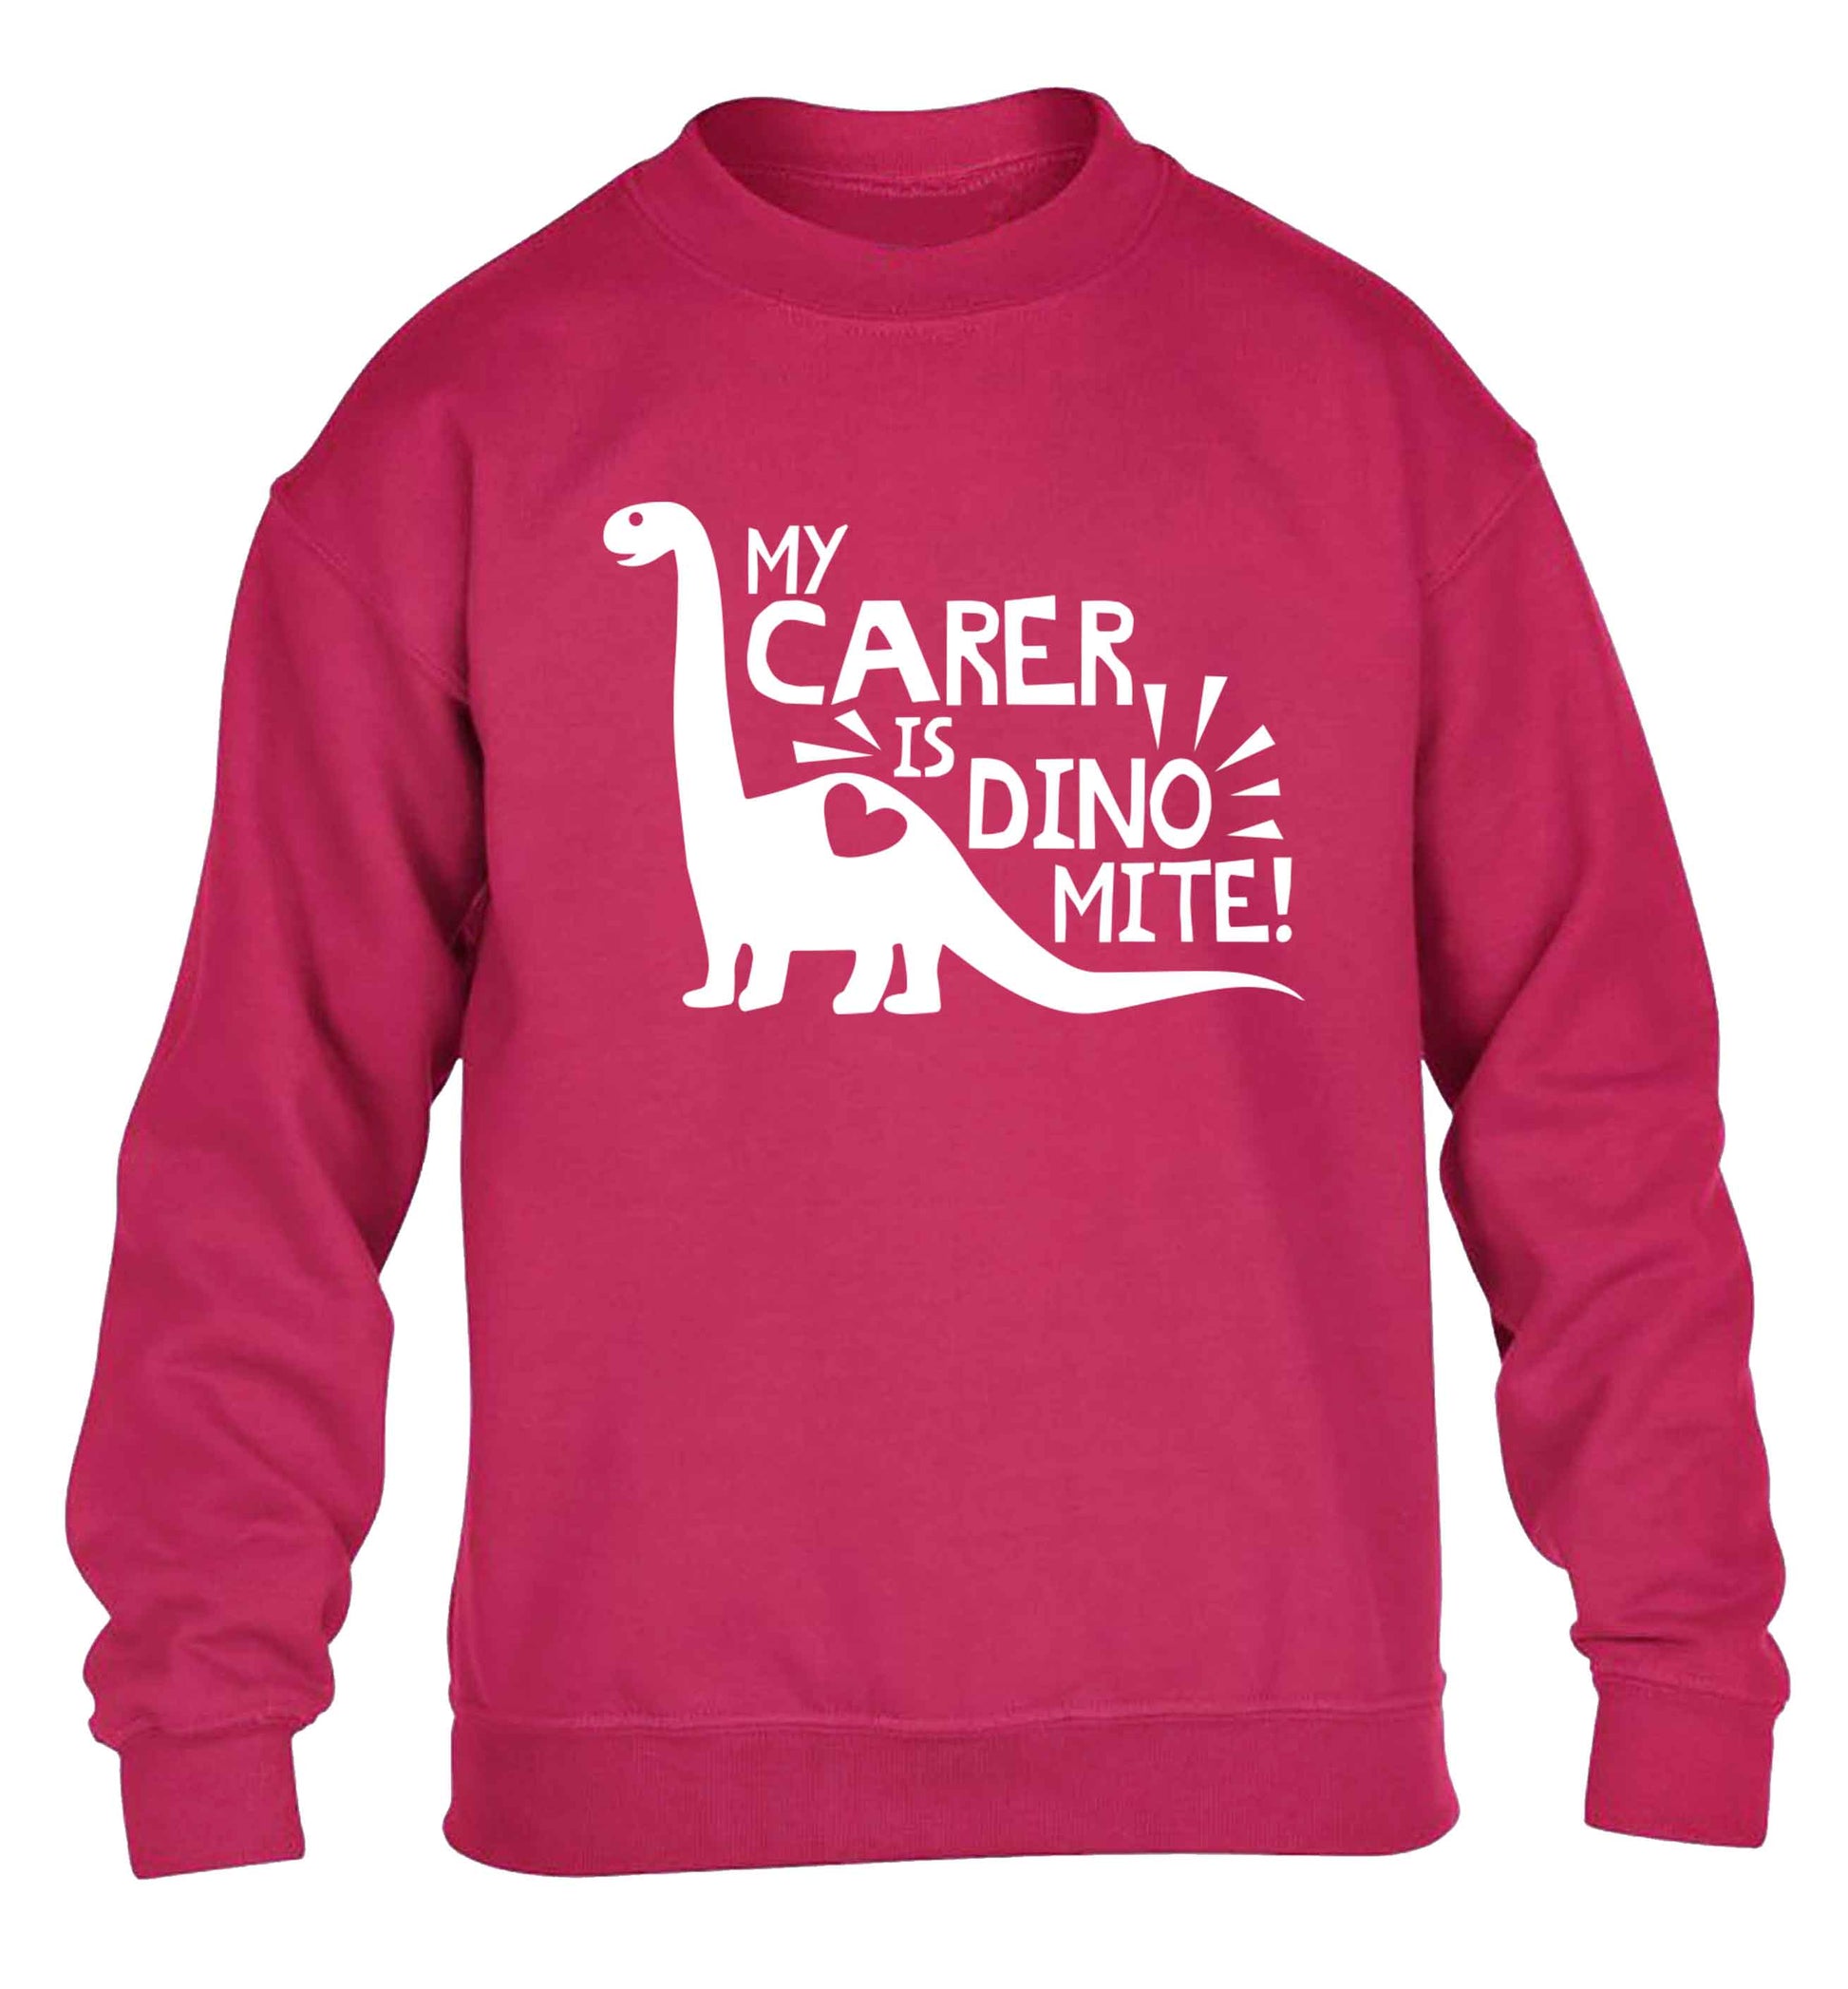 My carer is dinomite! children's pink sweater 12-13 Years